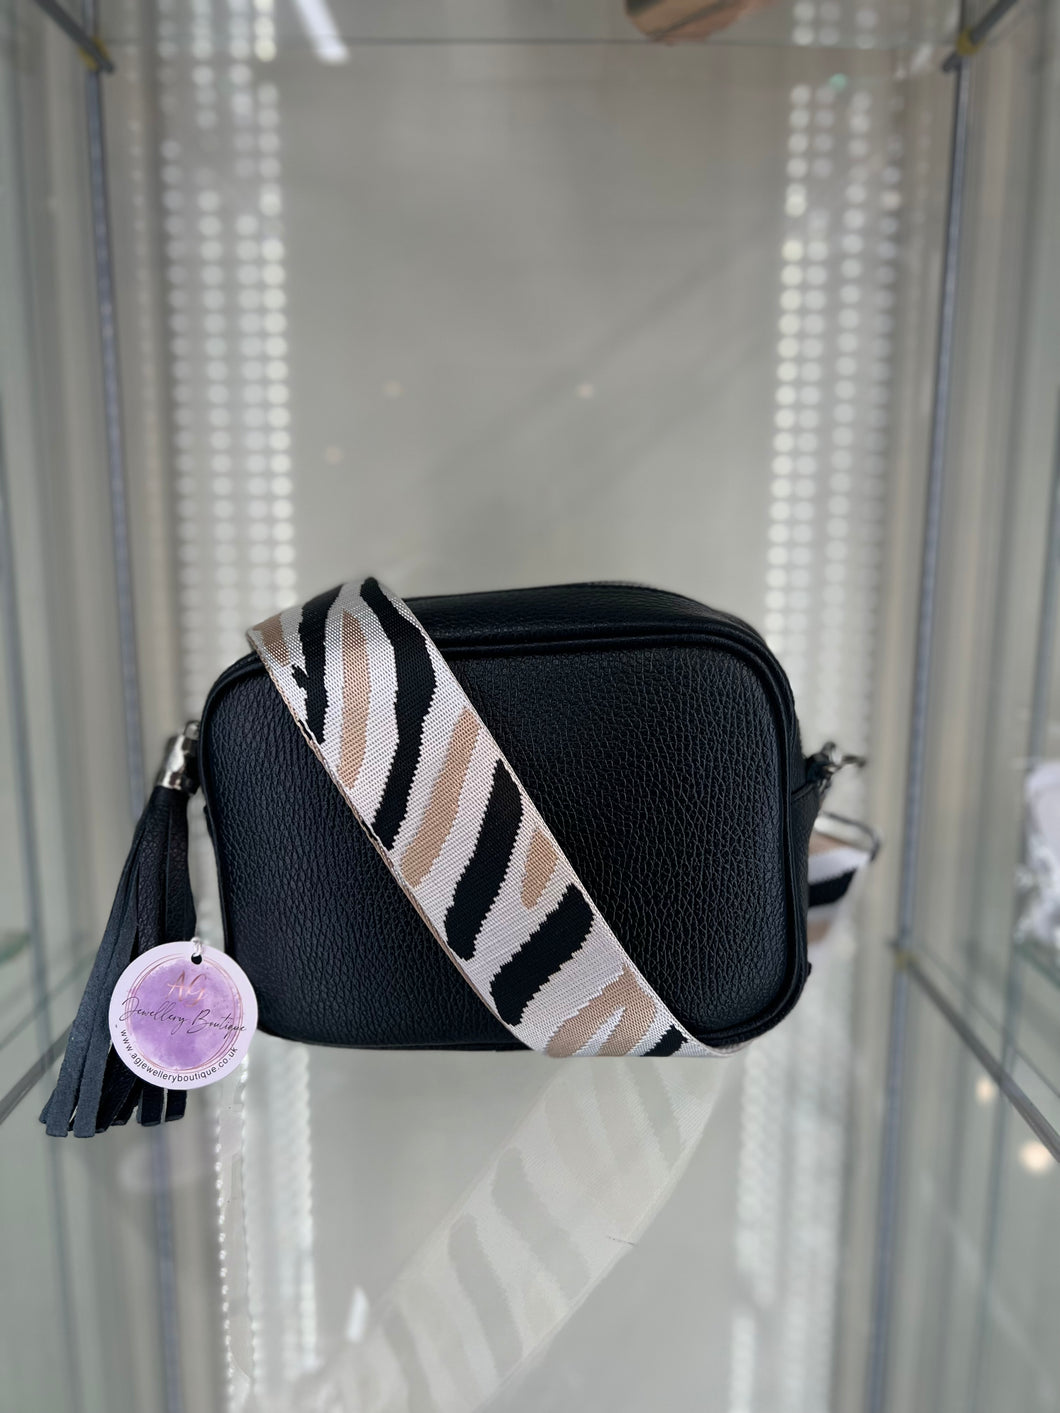 Real leather Black crossbody bag with Zebra Print strap